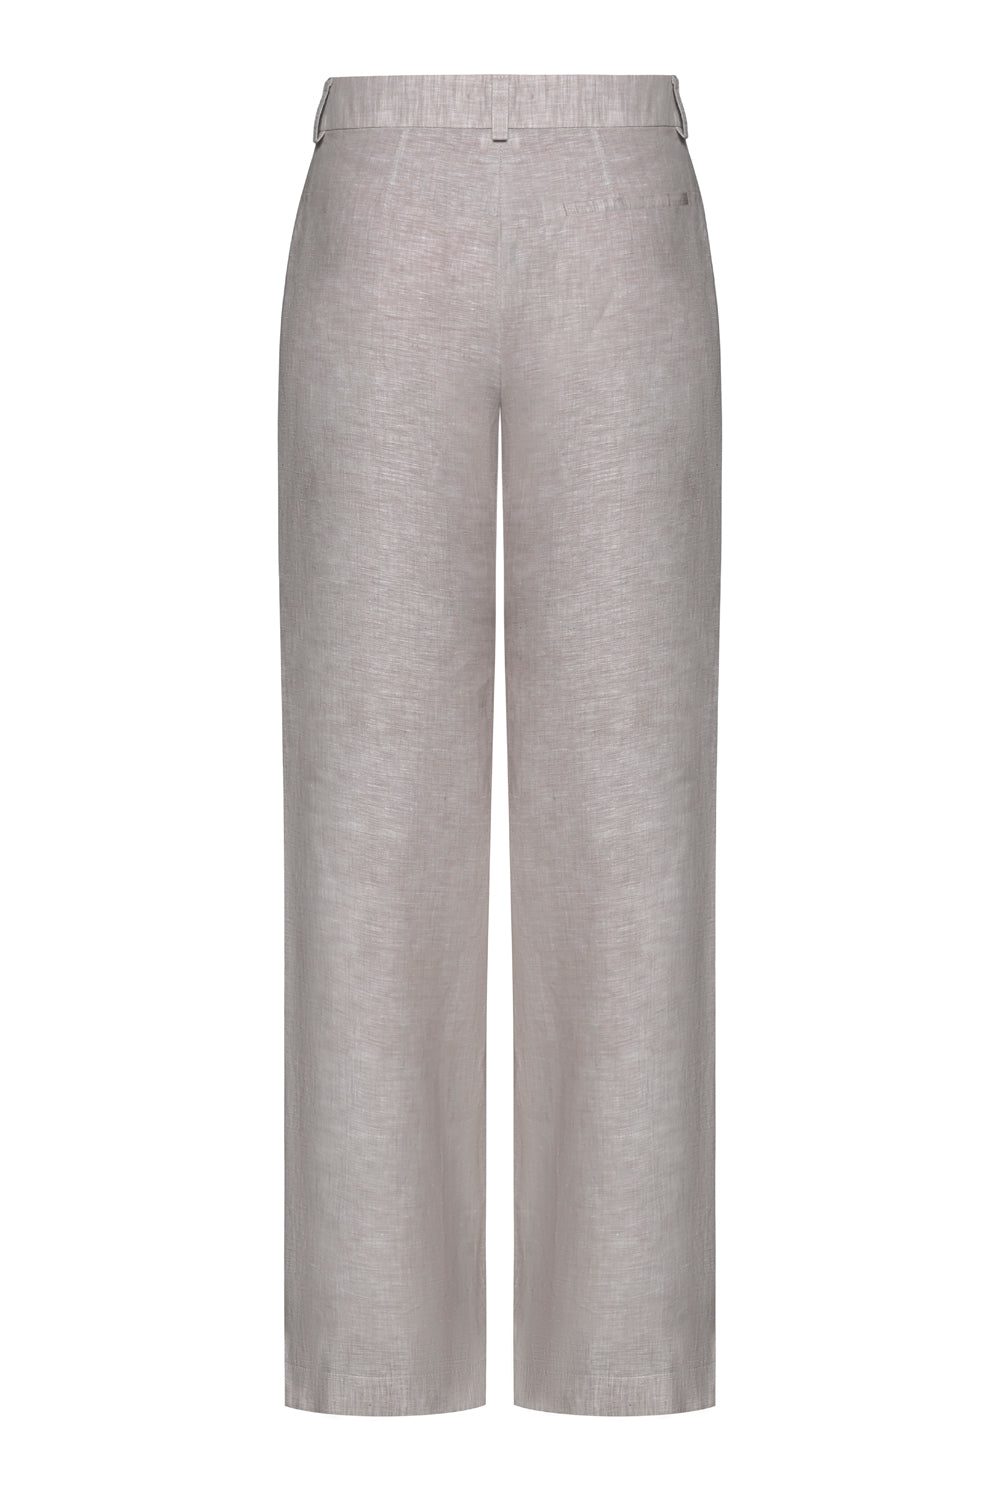 Gray Linen Pants